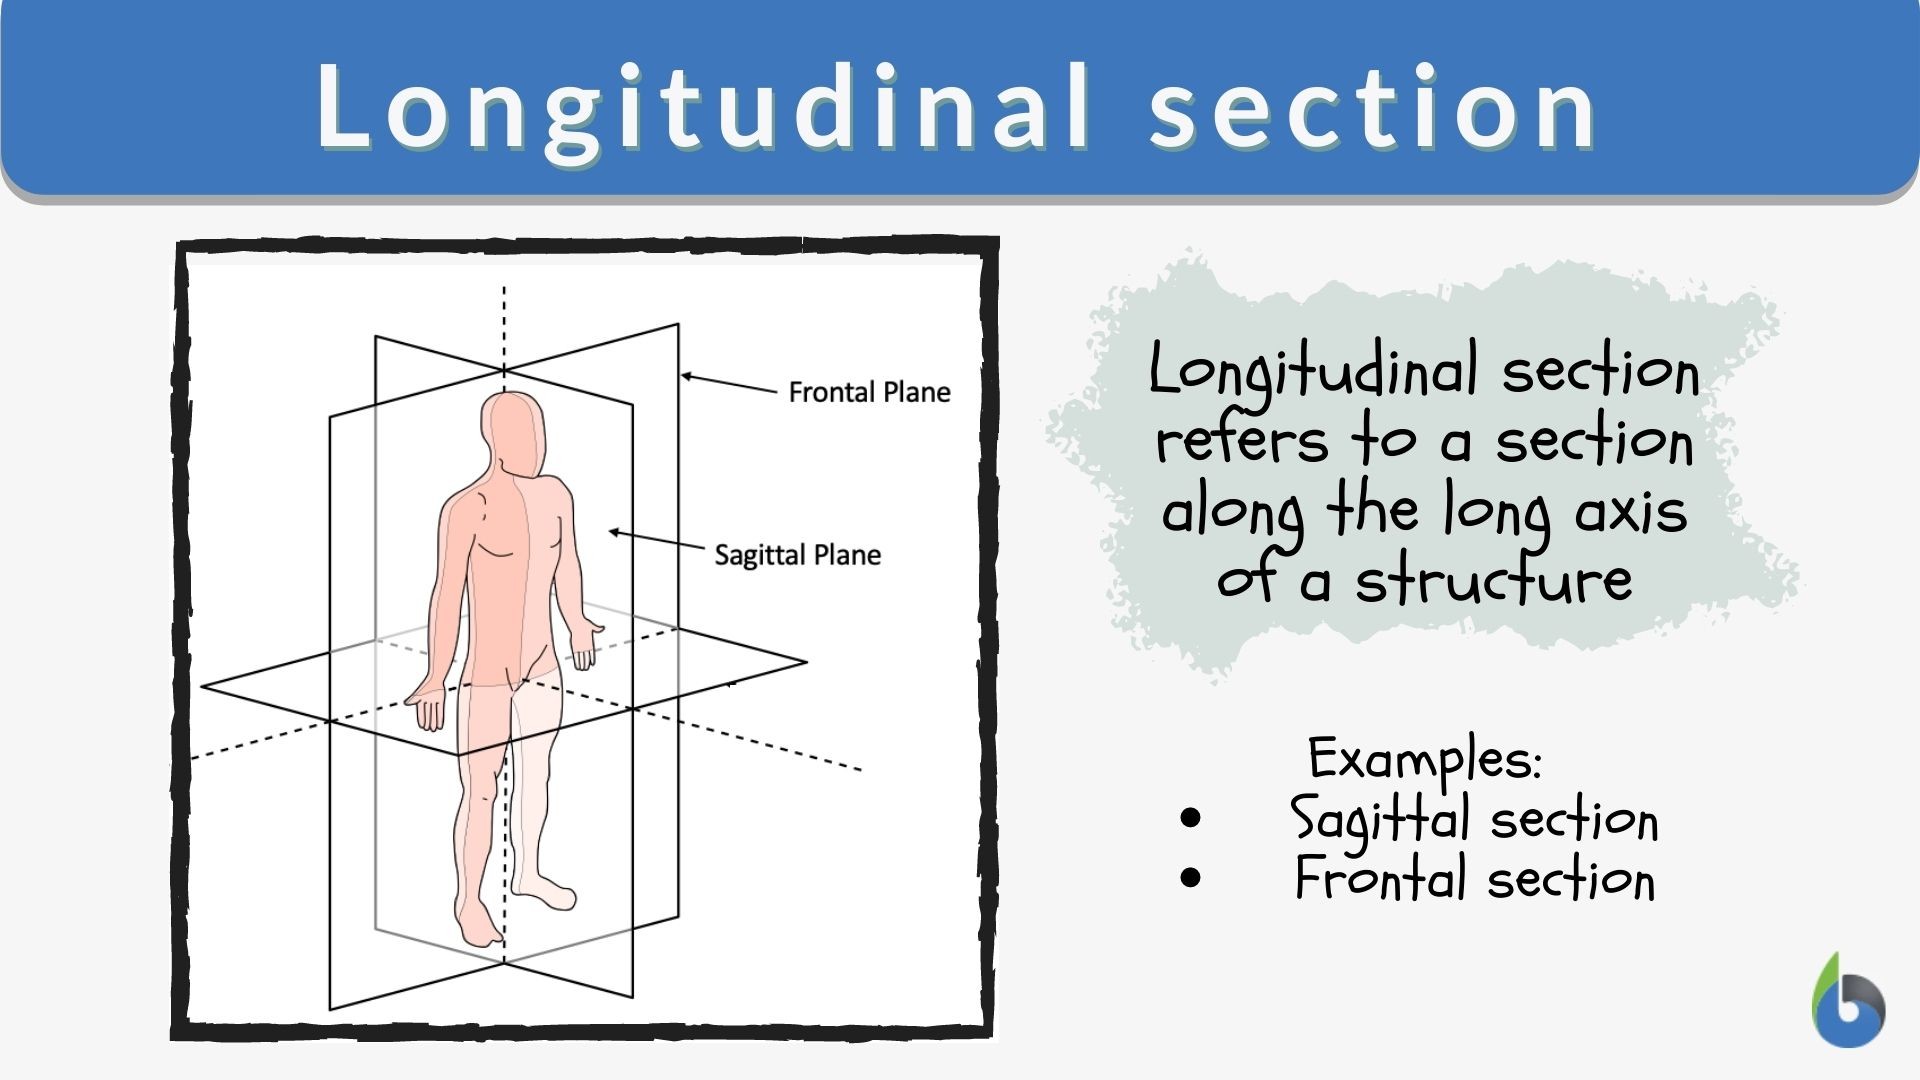 longitudinal axis movement